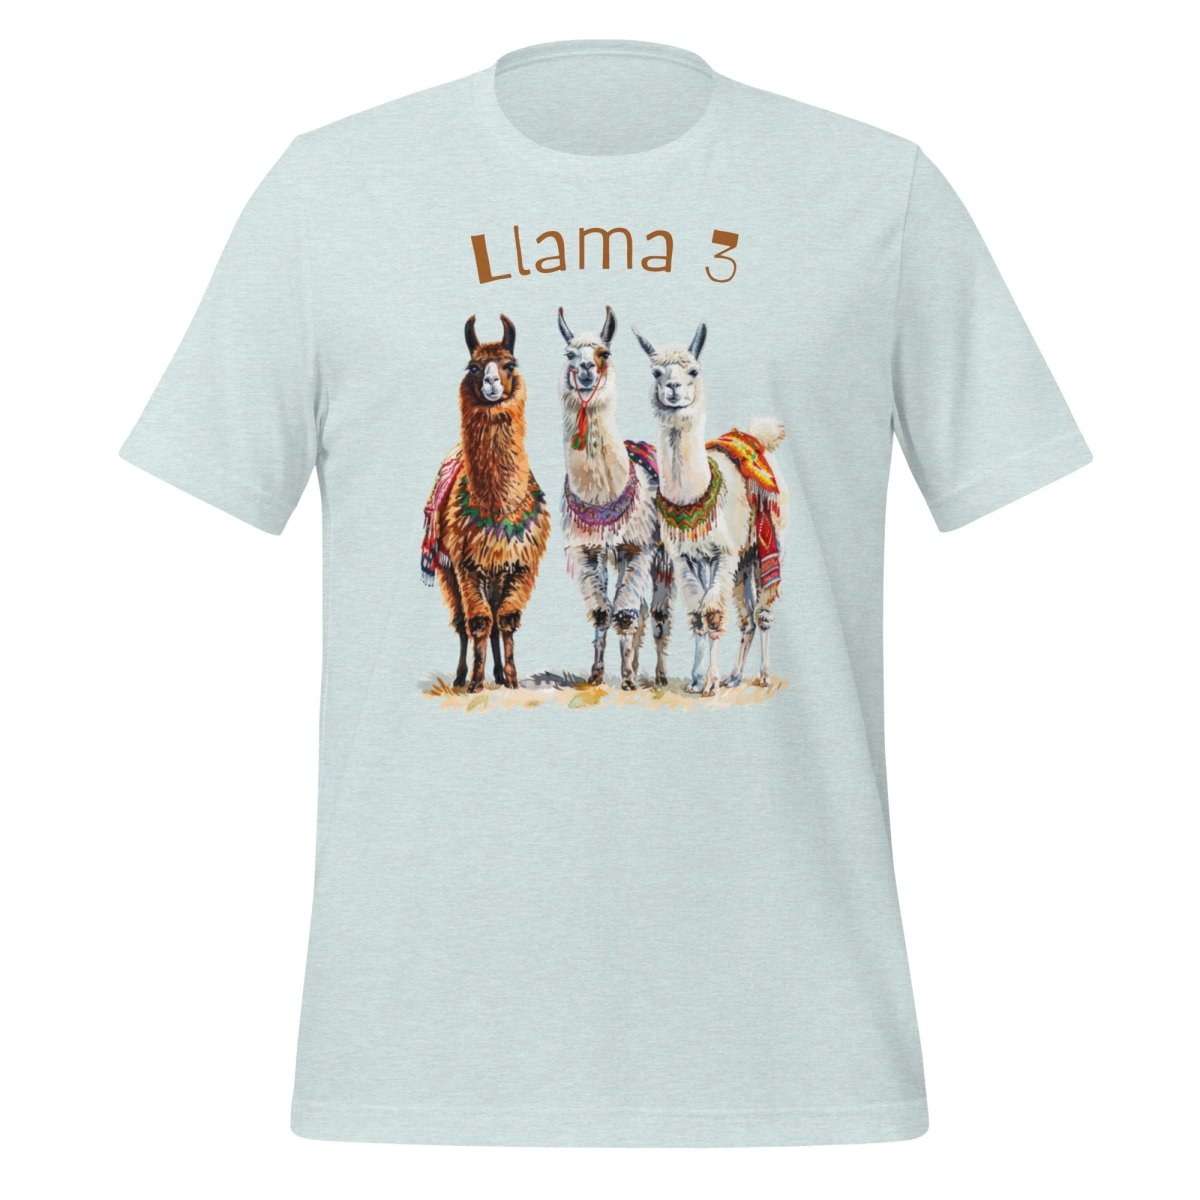 3 Llama 3 Llamas T - Shirt (unisex) - Heather Prism Ice Blue - AI Store